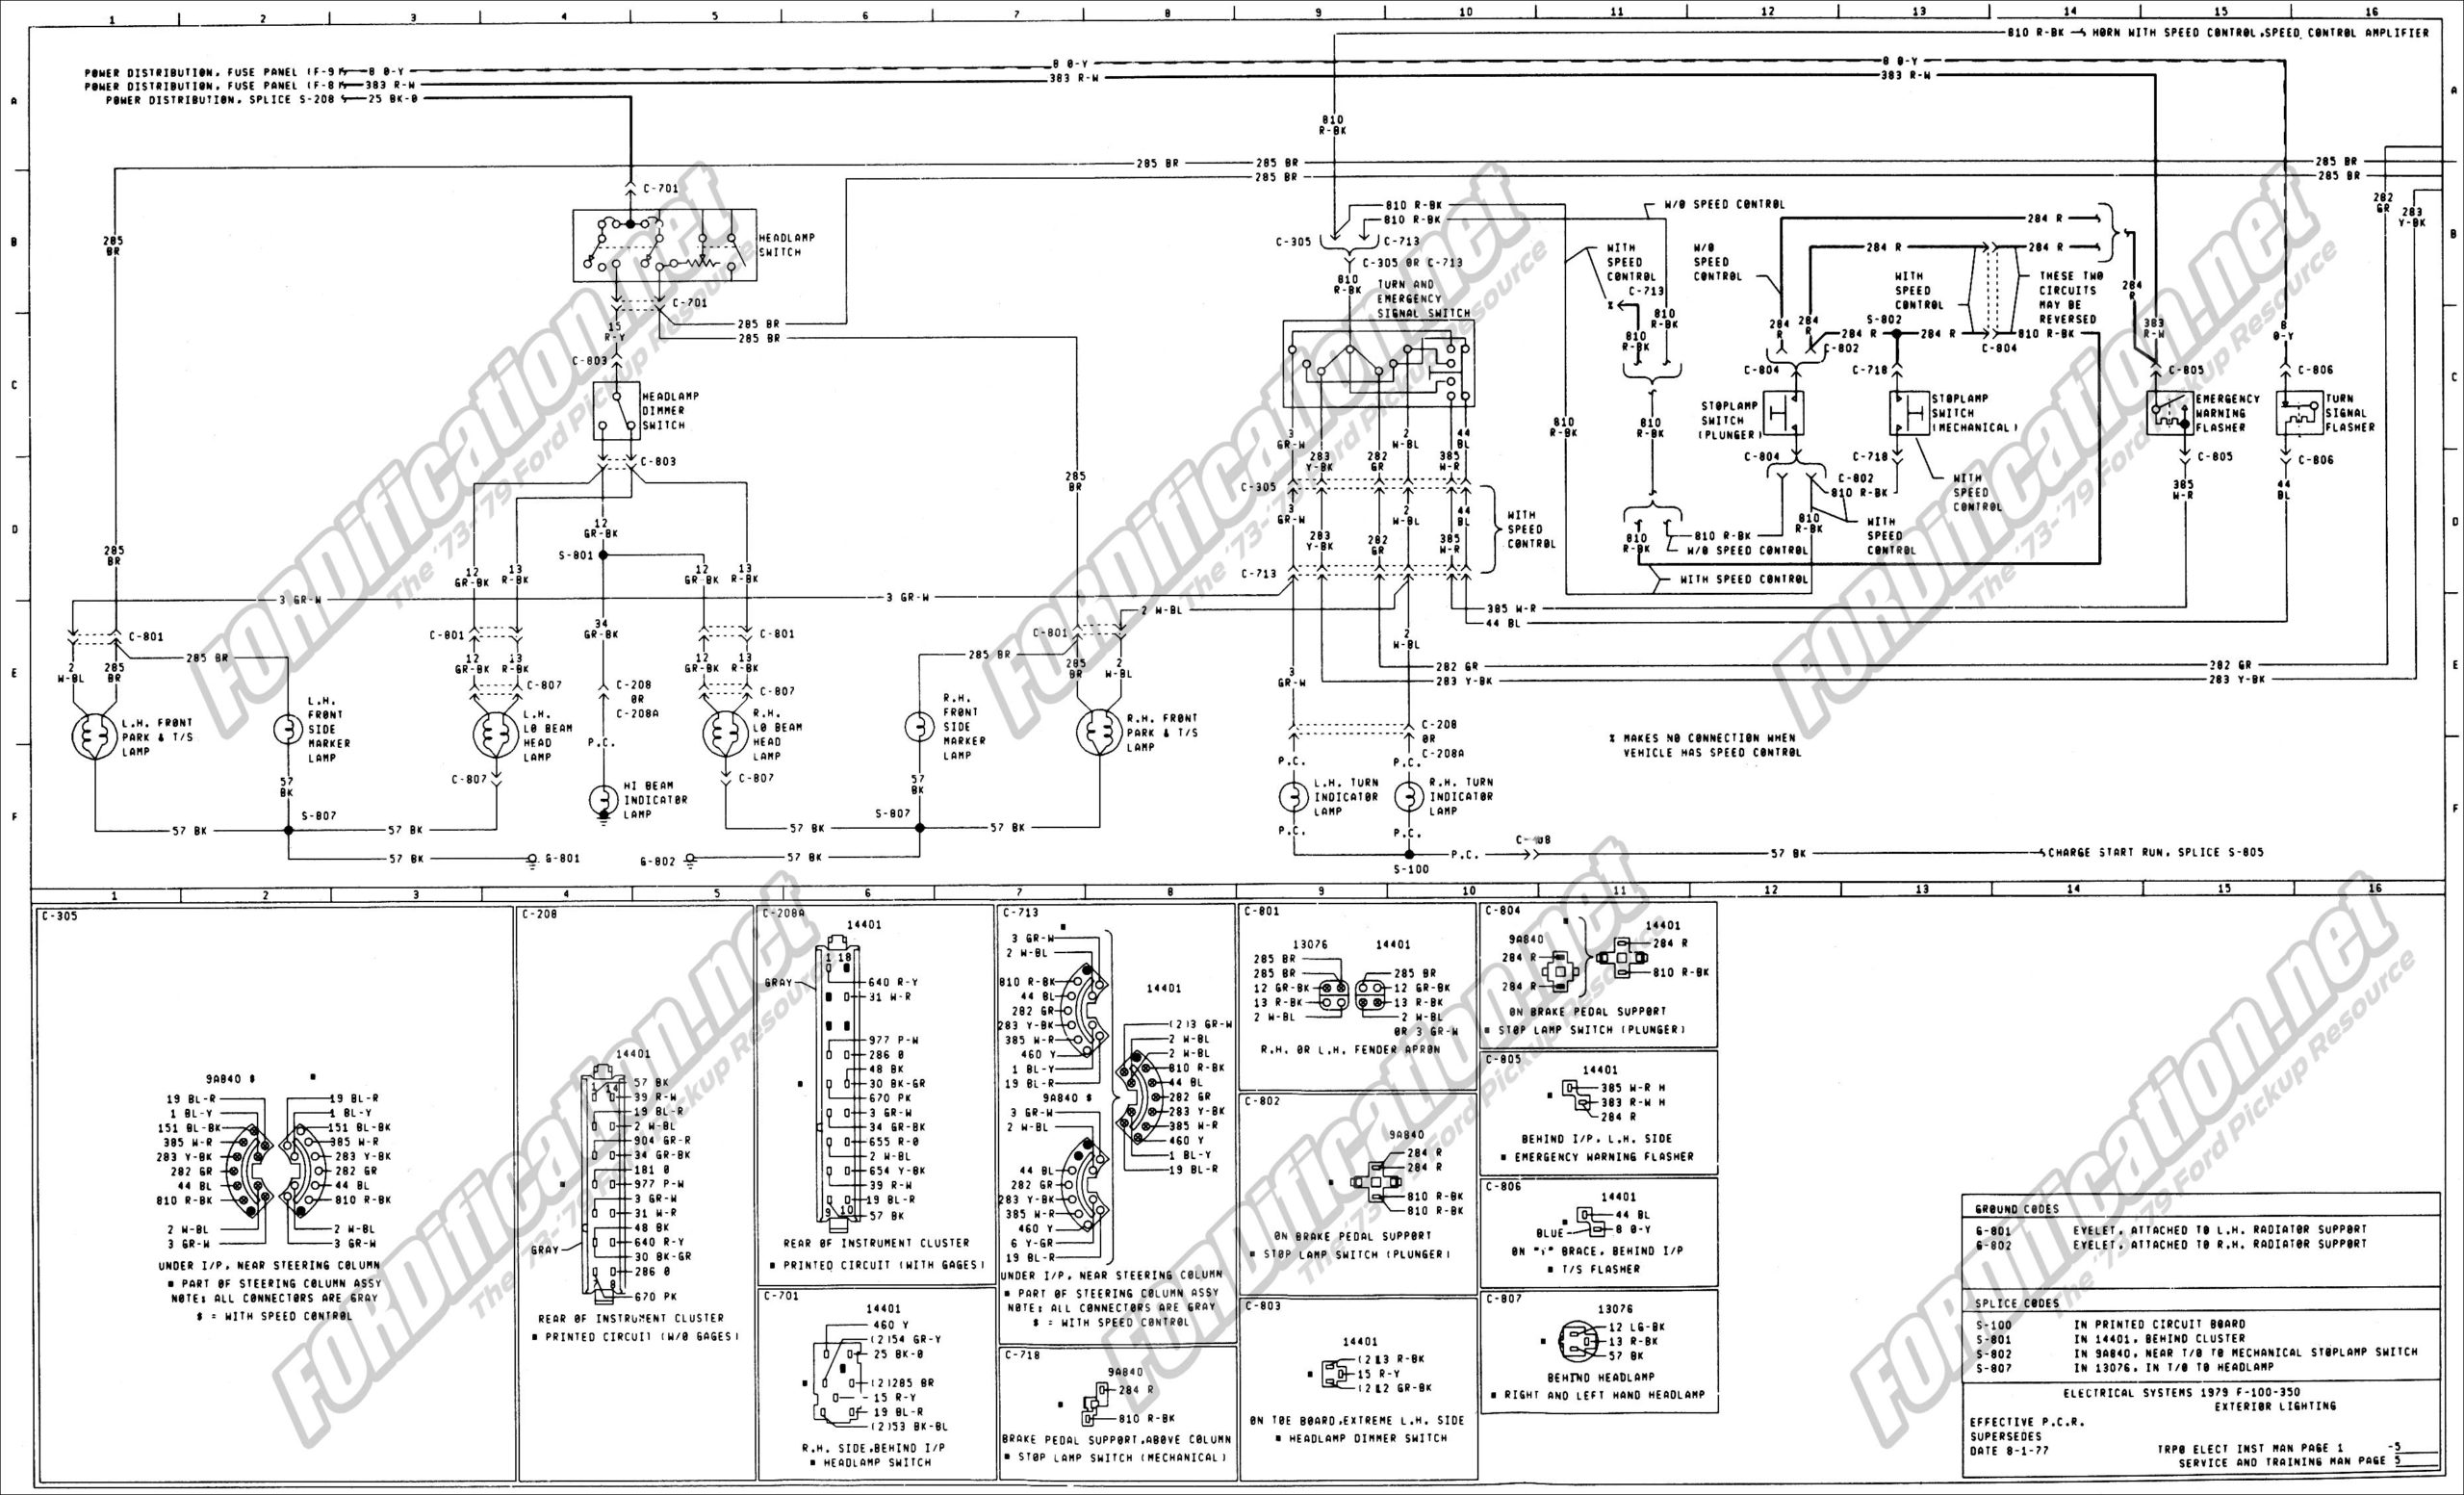 F550 Trailer Wiring Diagram